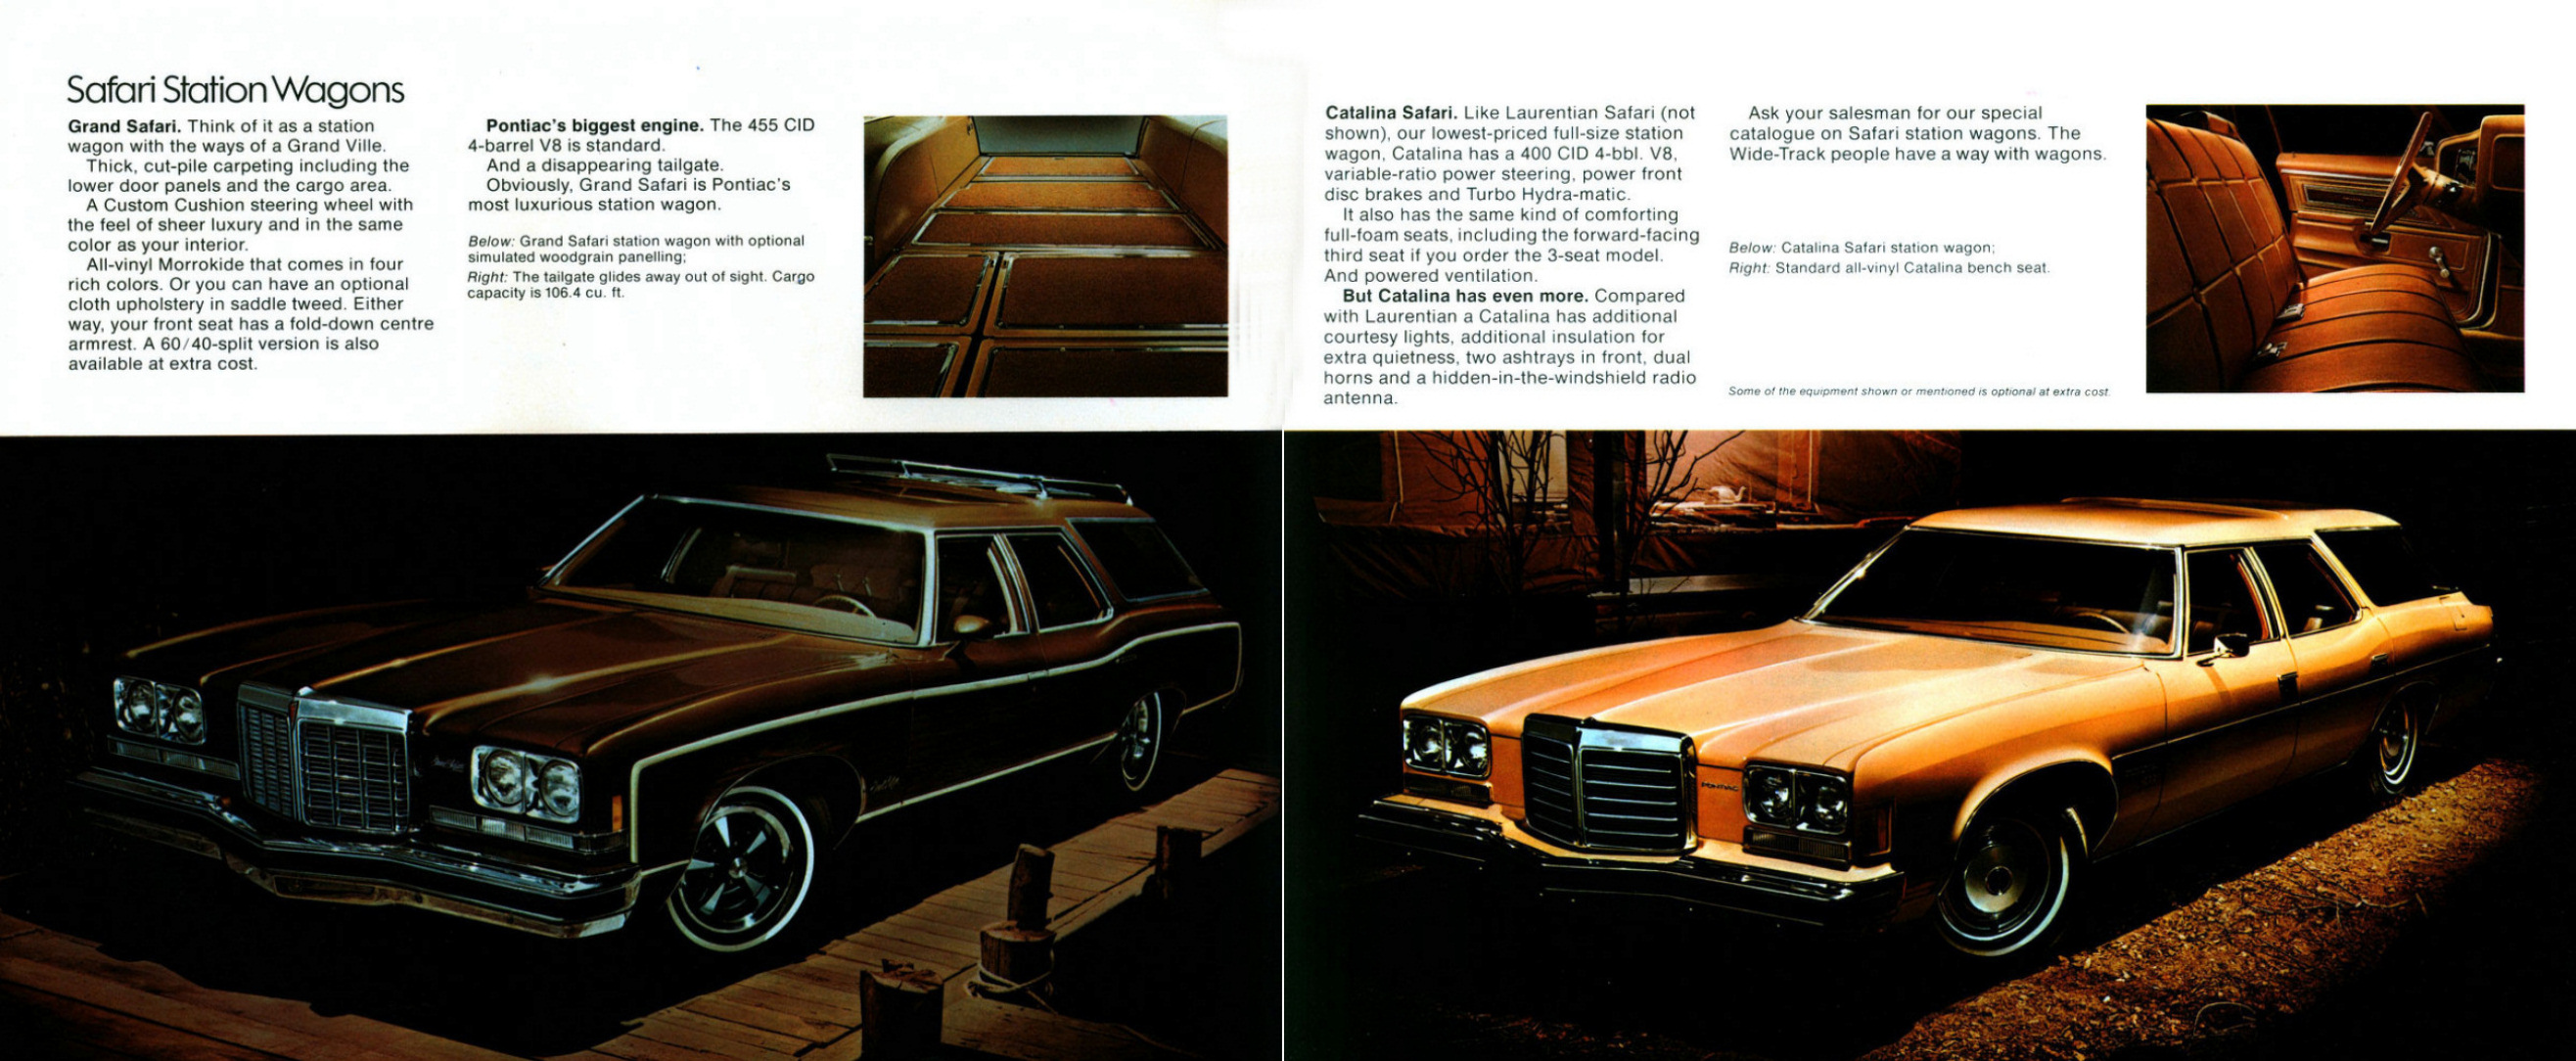 1974_Pontiac_Full_Size_Cdn-18-19